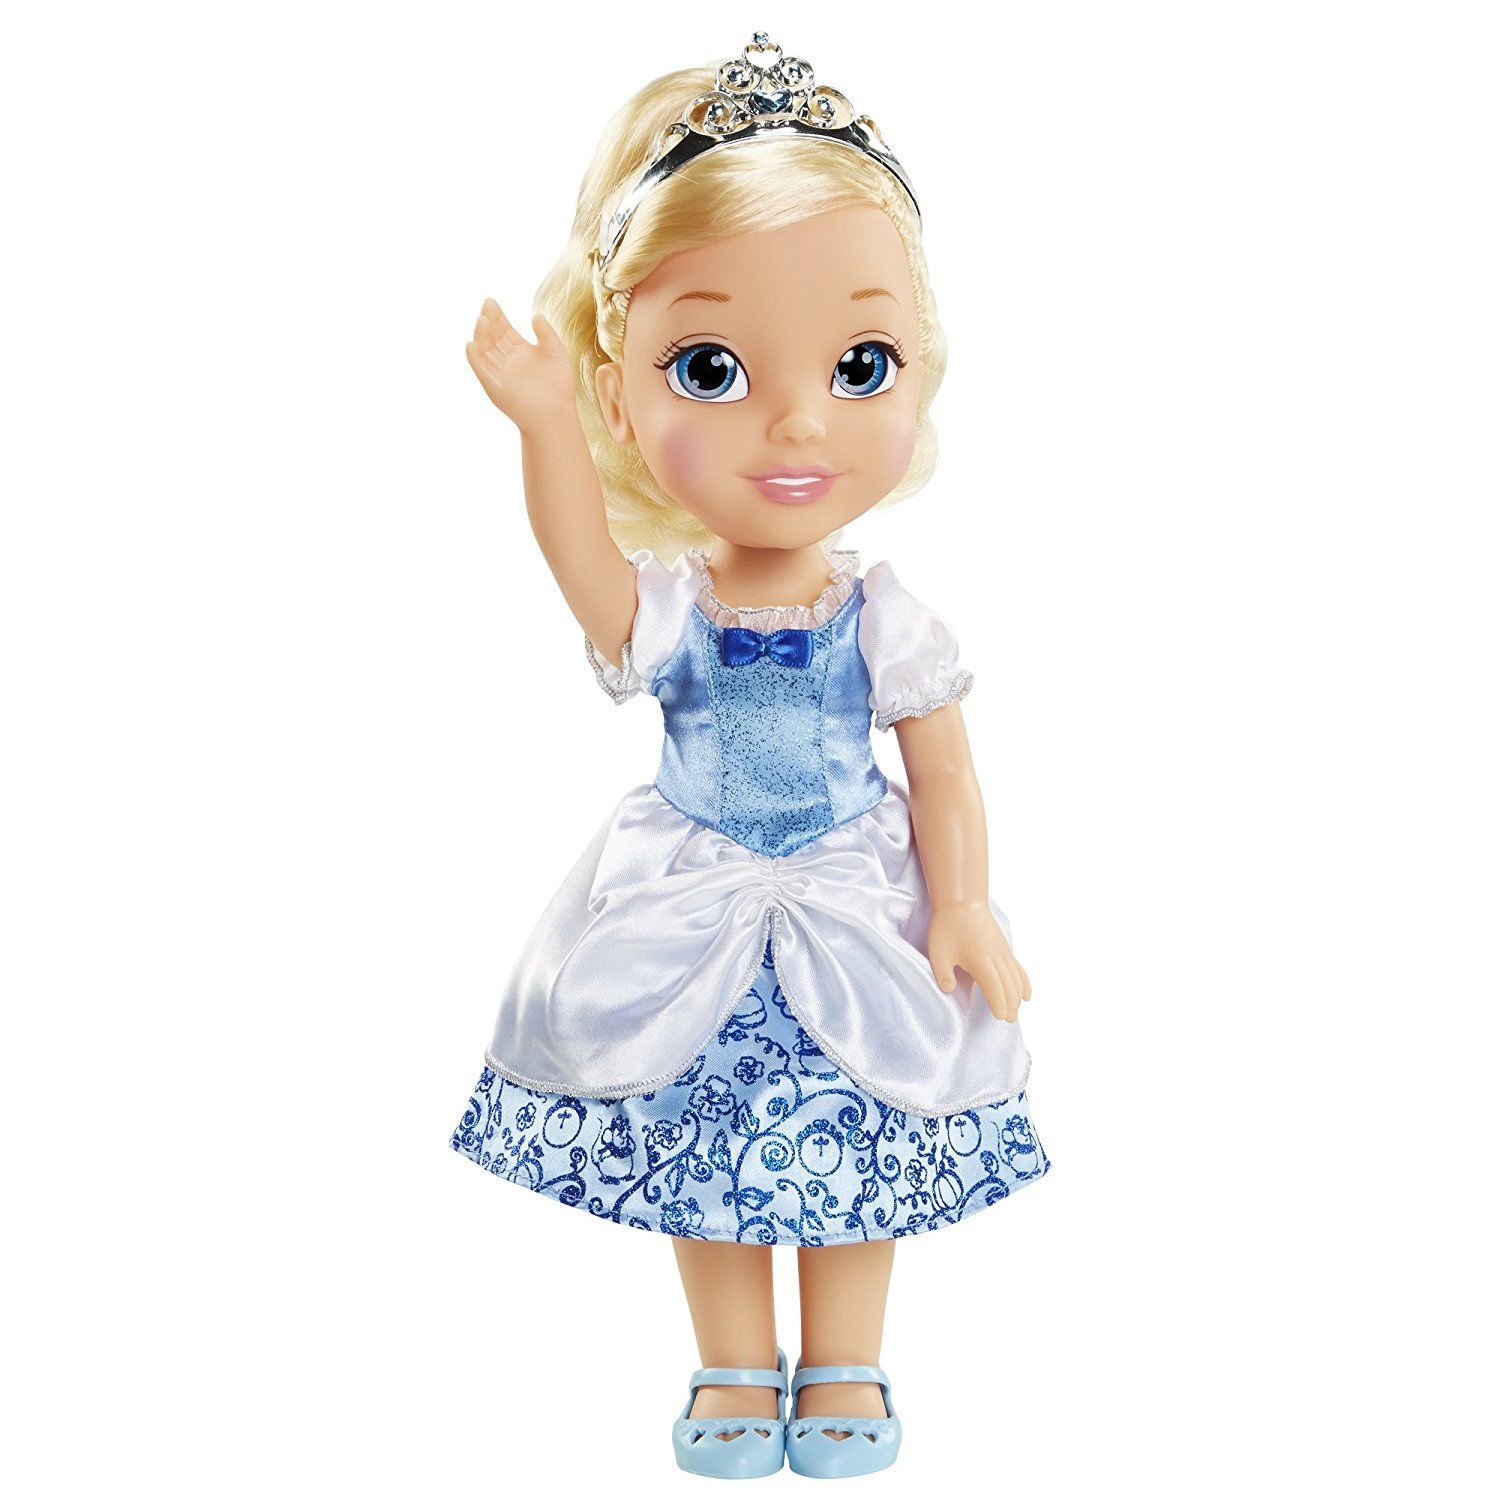 Disney Princess - My Friend - Cinderella (99542)